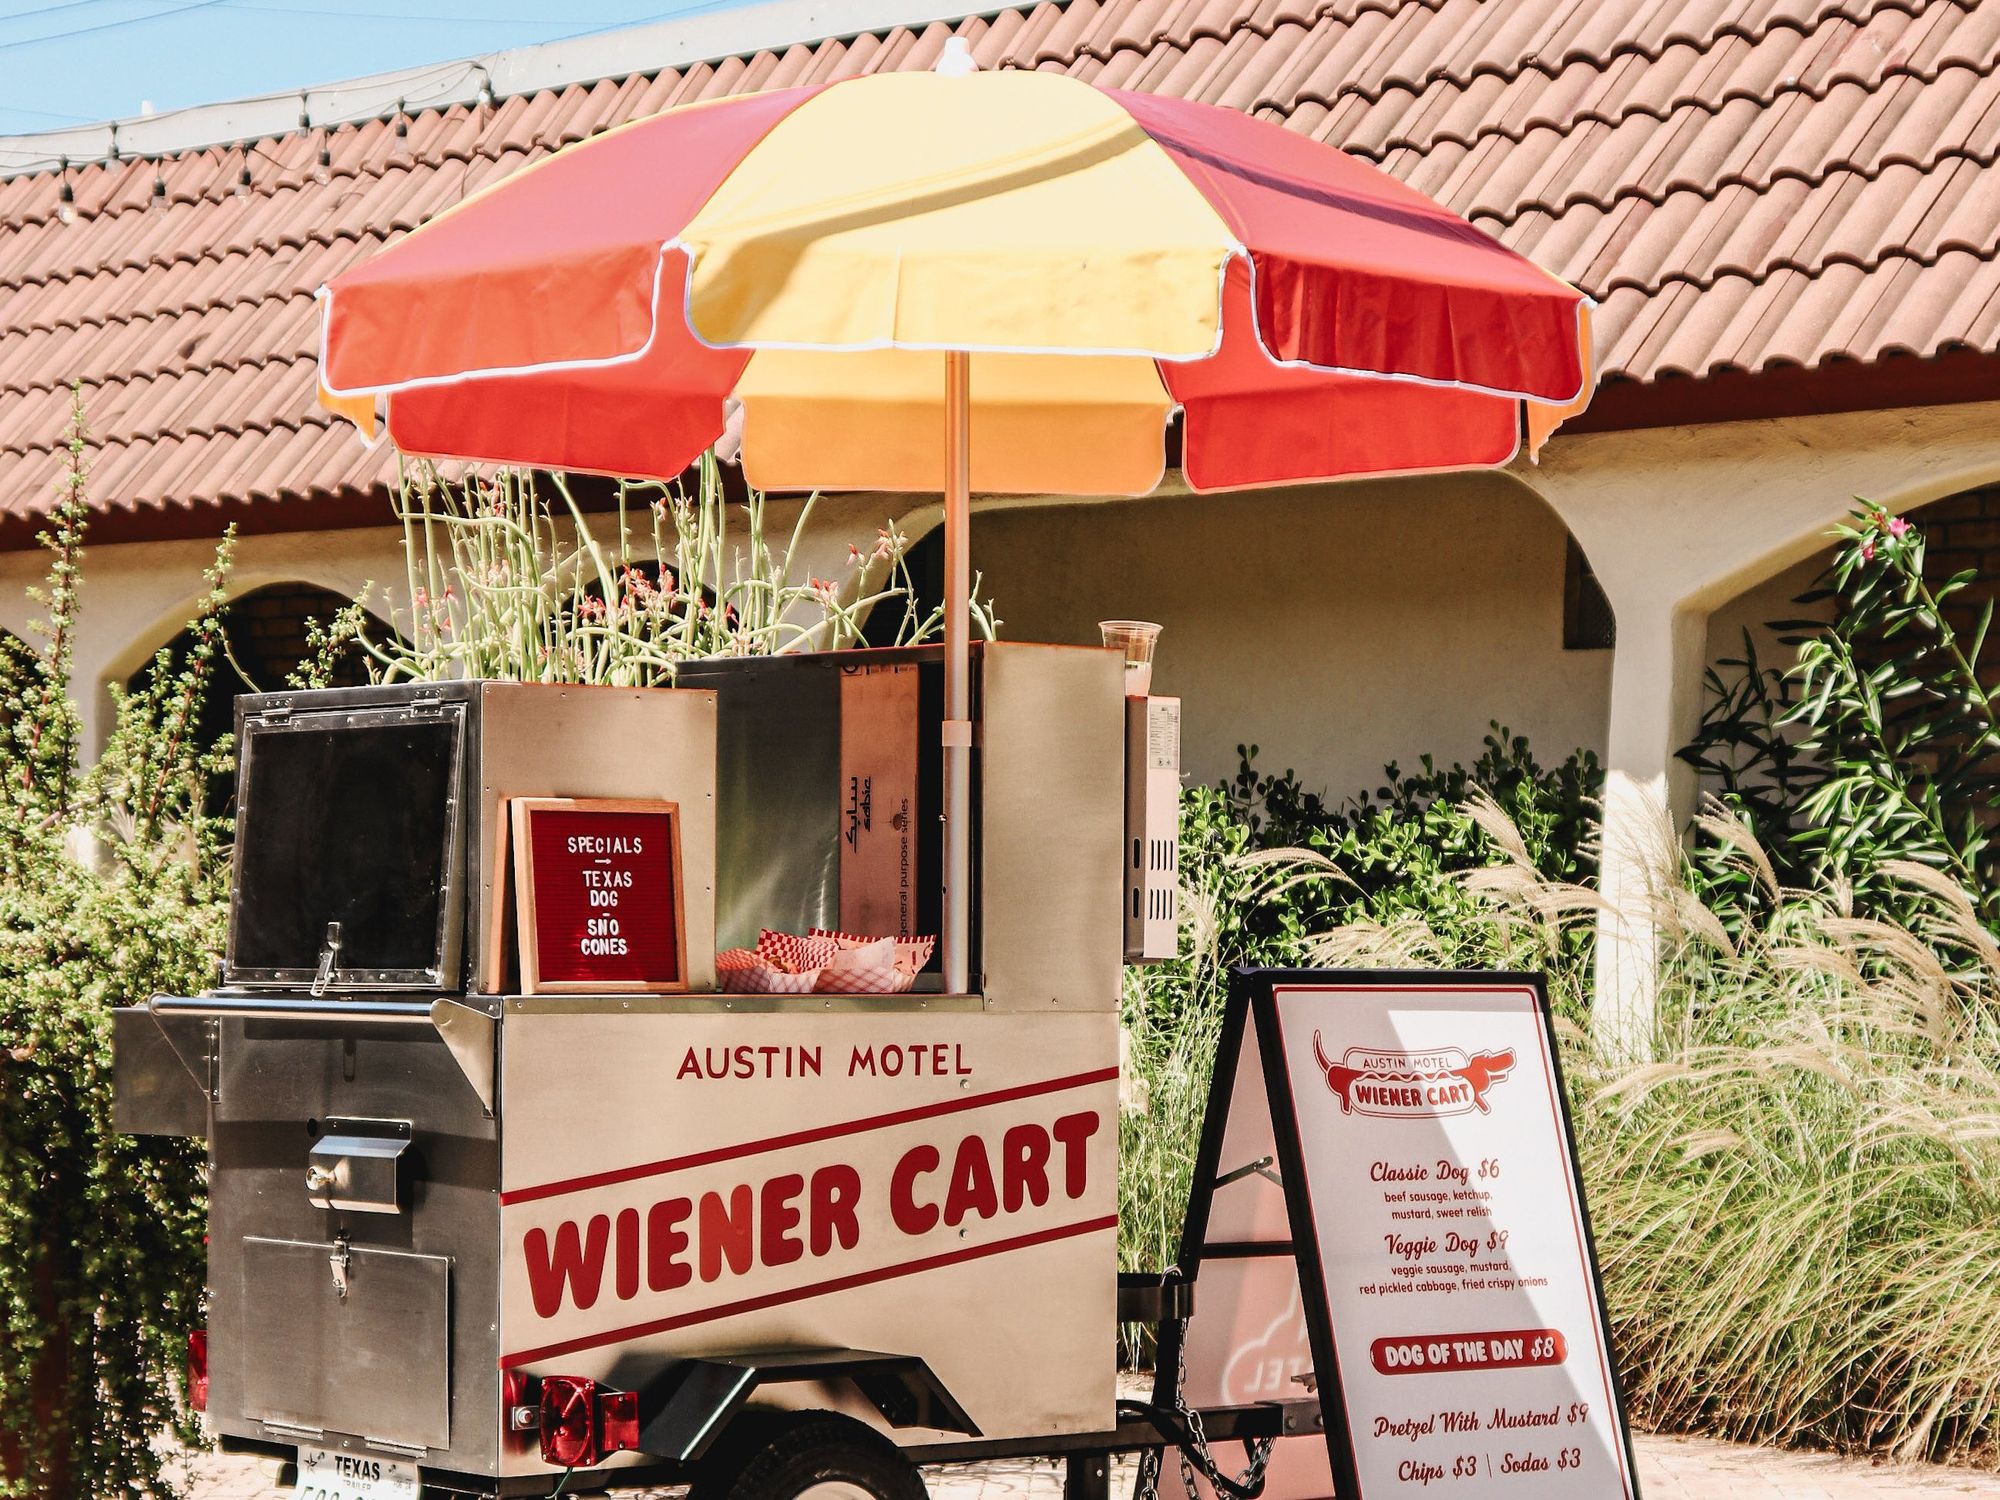 Austin Motel hot dog cart wiener cart